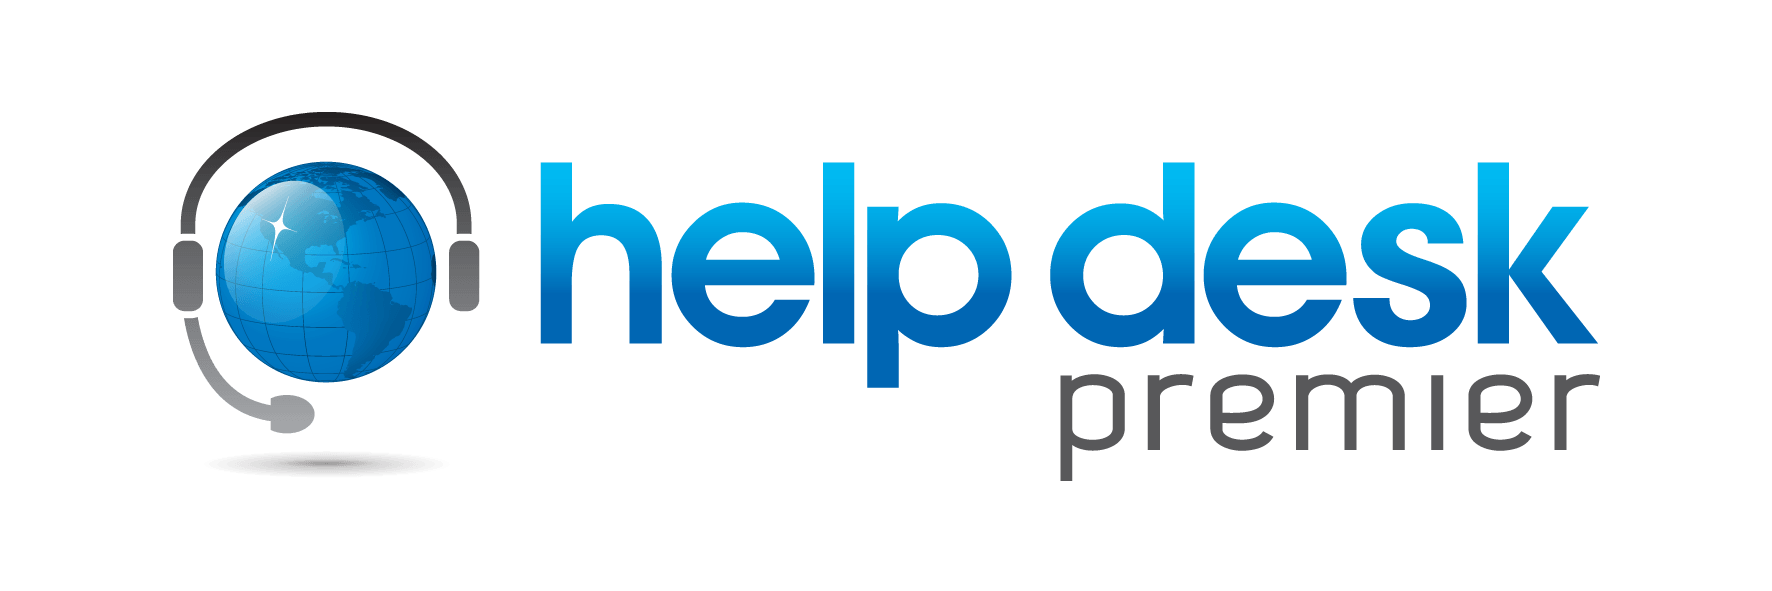 Help Desk Logo - BrightBox Solutions, Creators of Help Desk Premier, Secures $500,000 ...